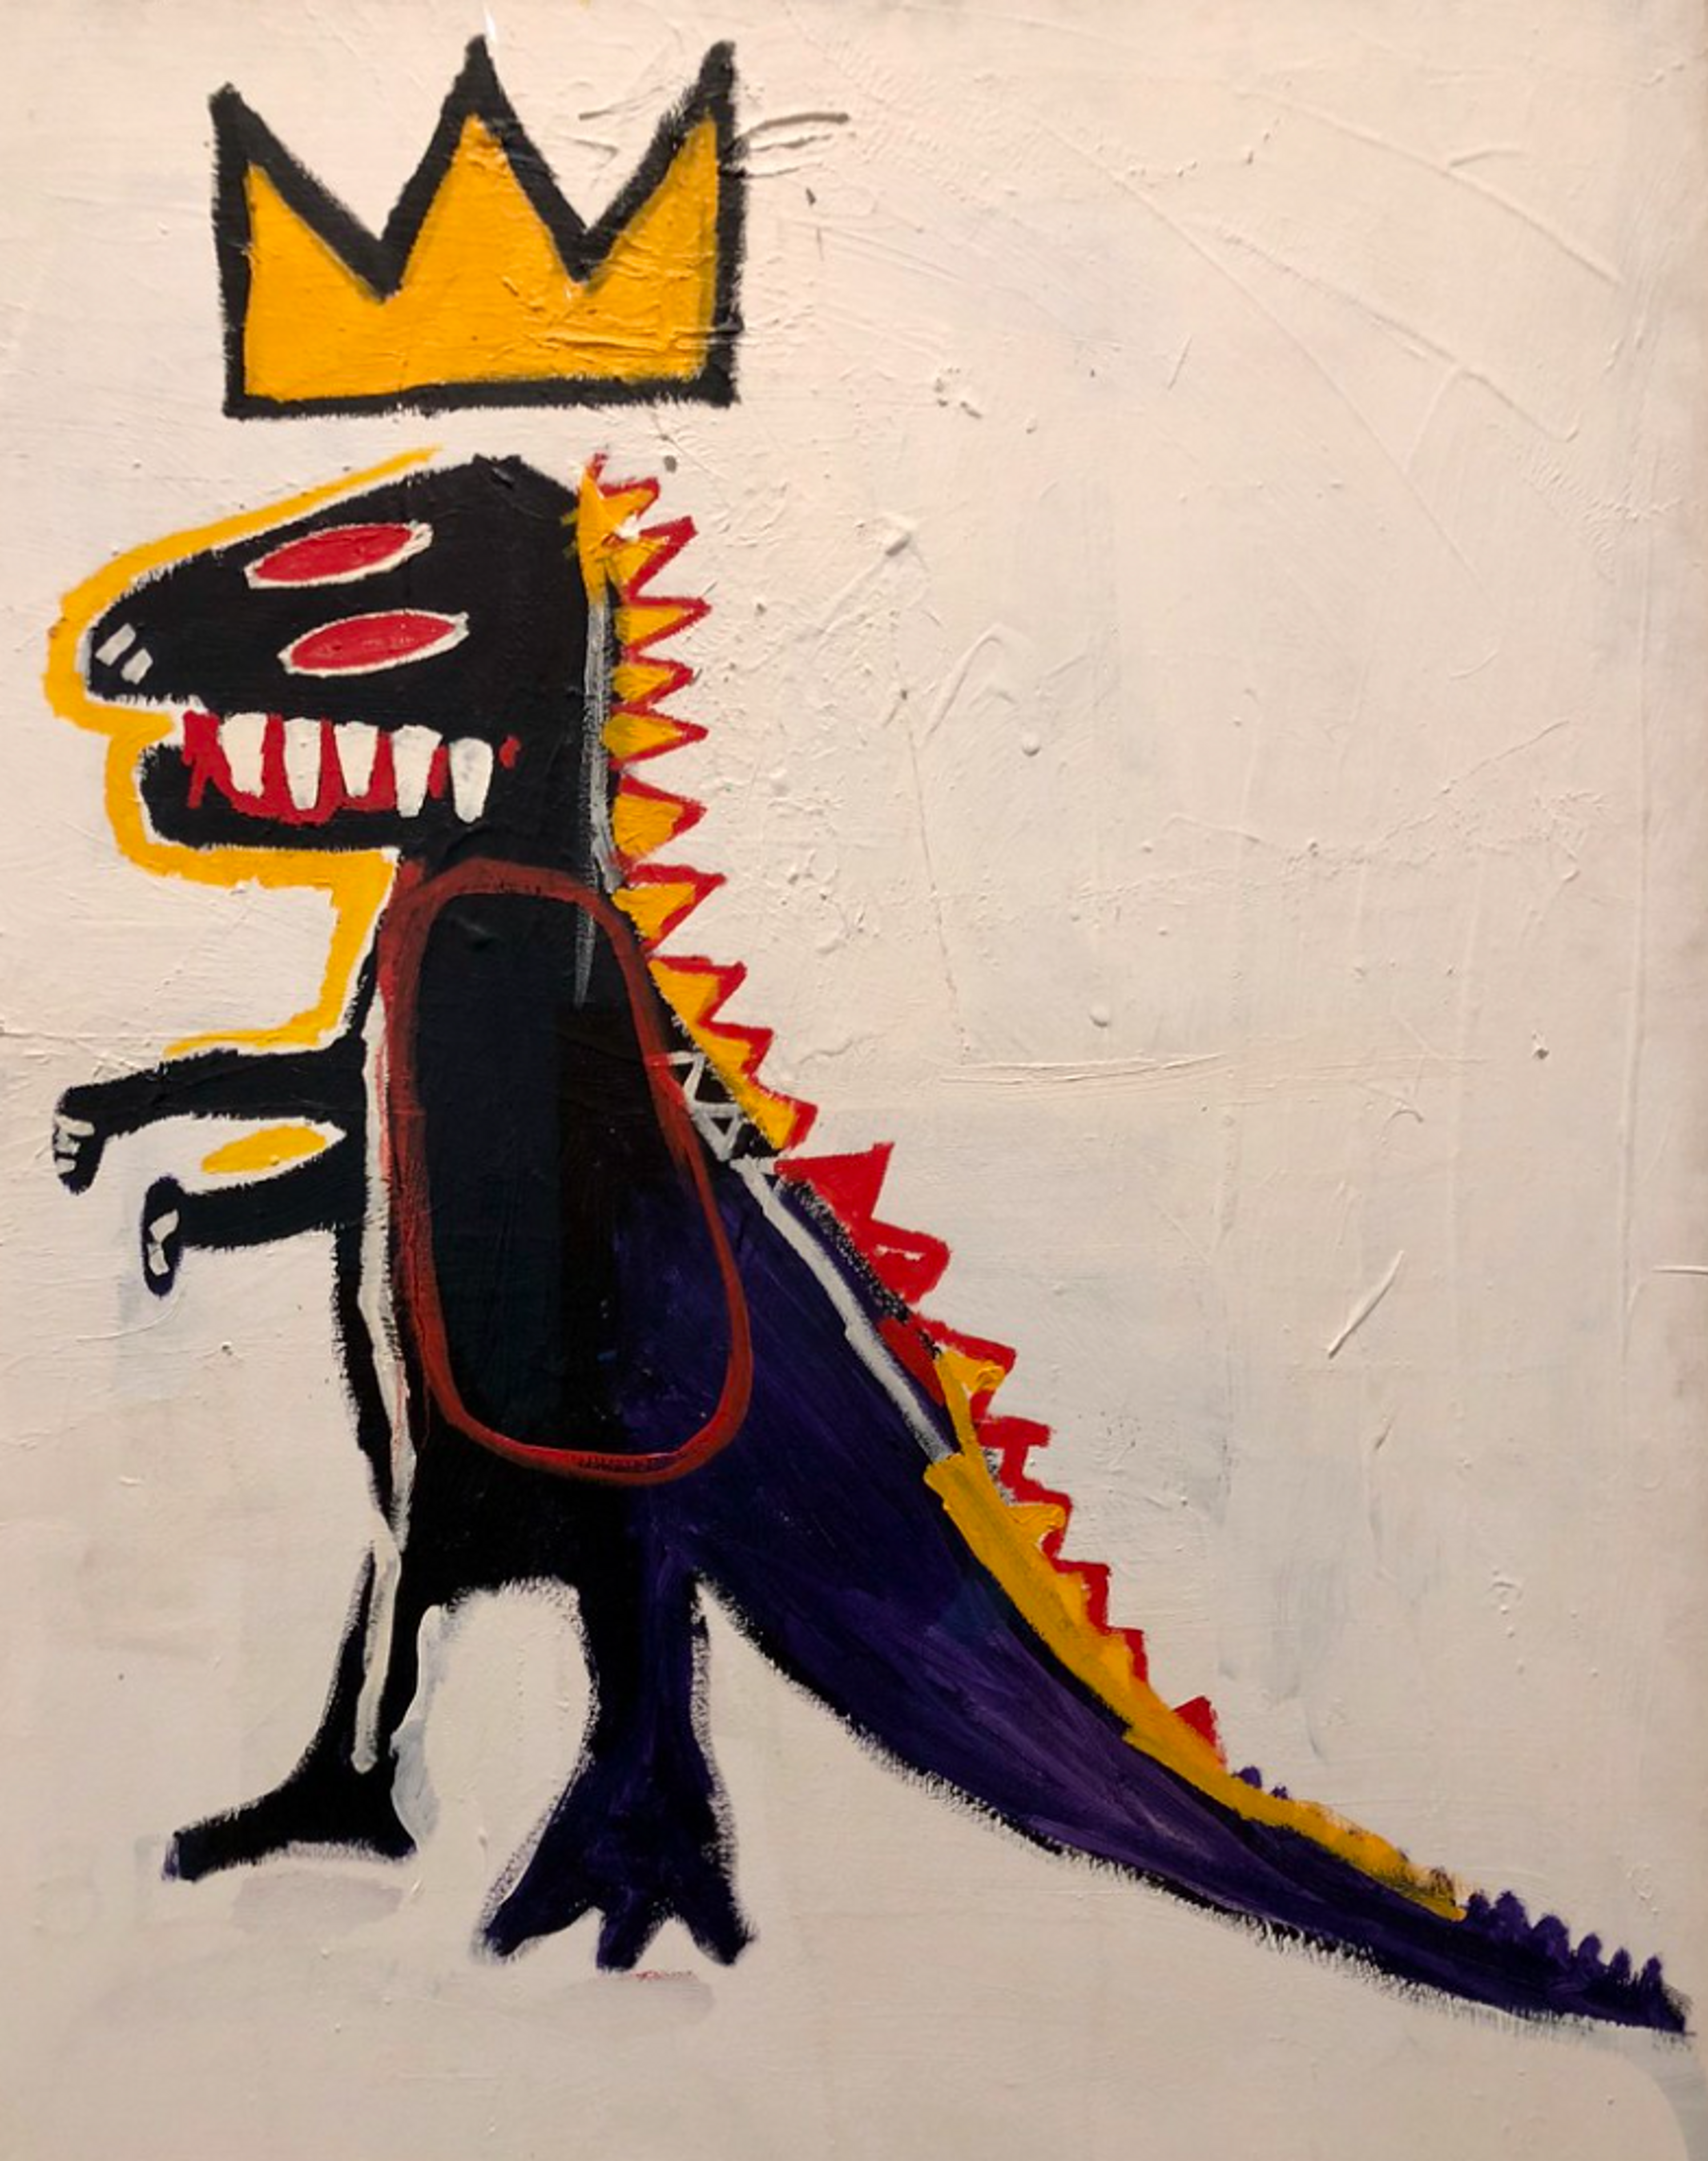 Pez Dispenser by Jean-Michel Basquiat